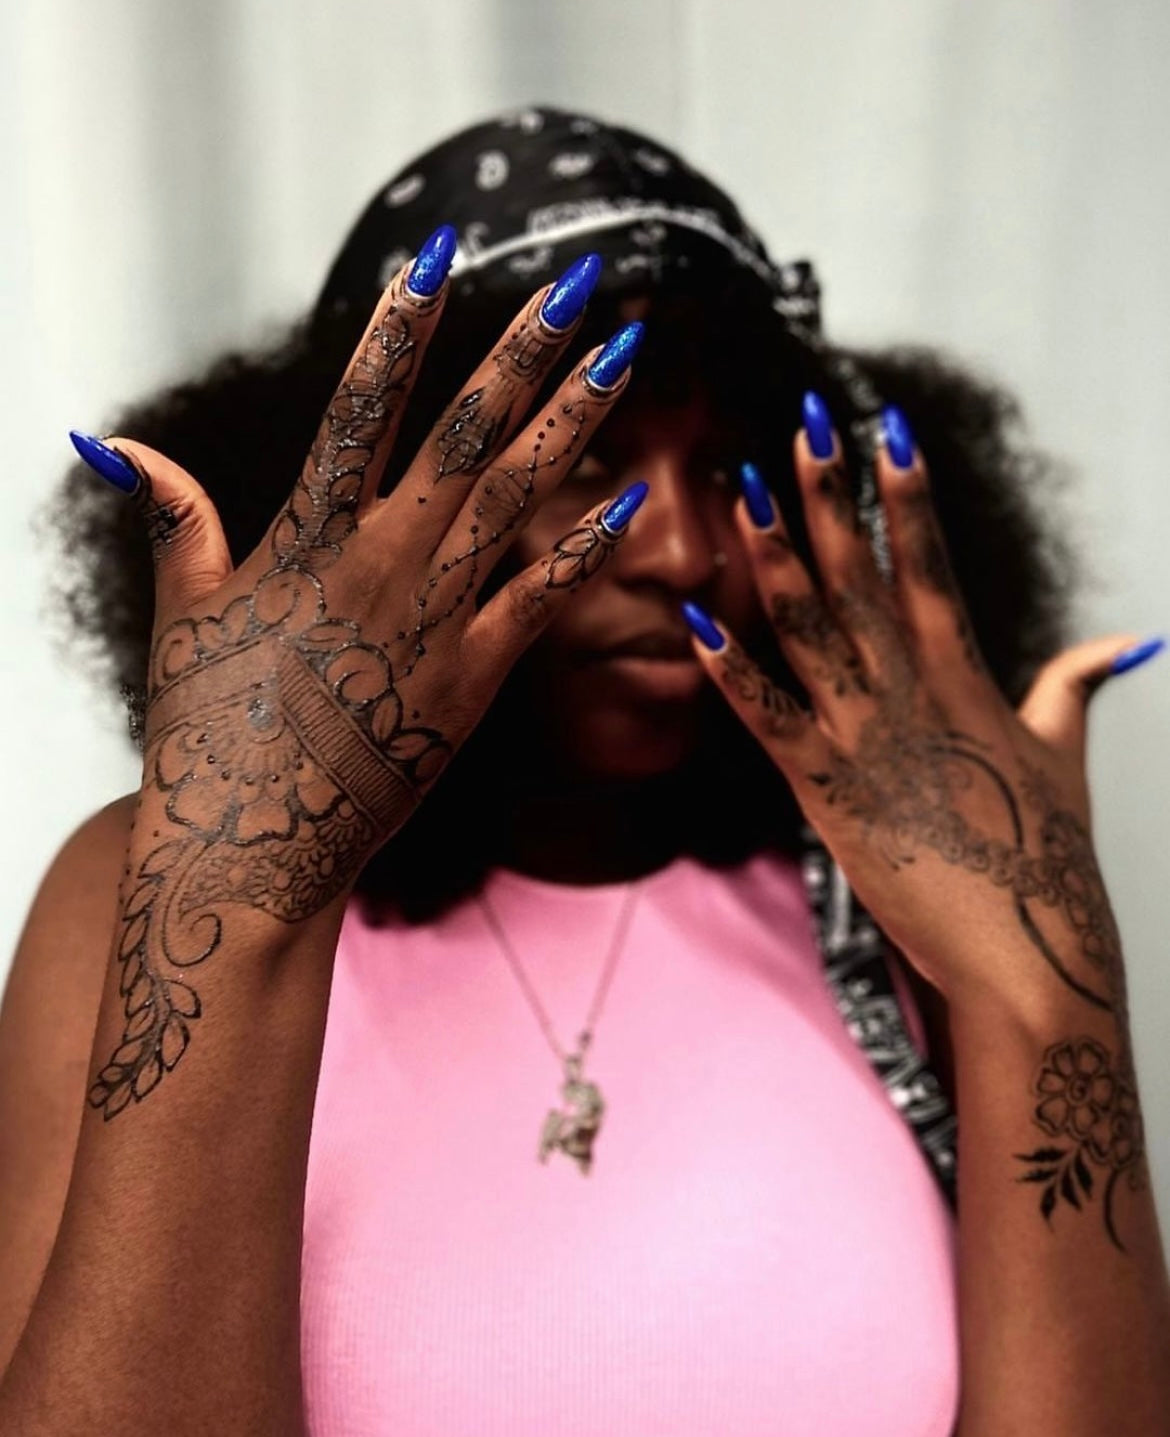 Jagua tattoos on different skin tones